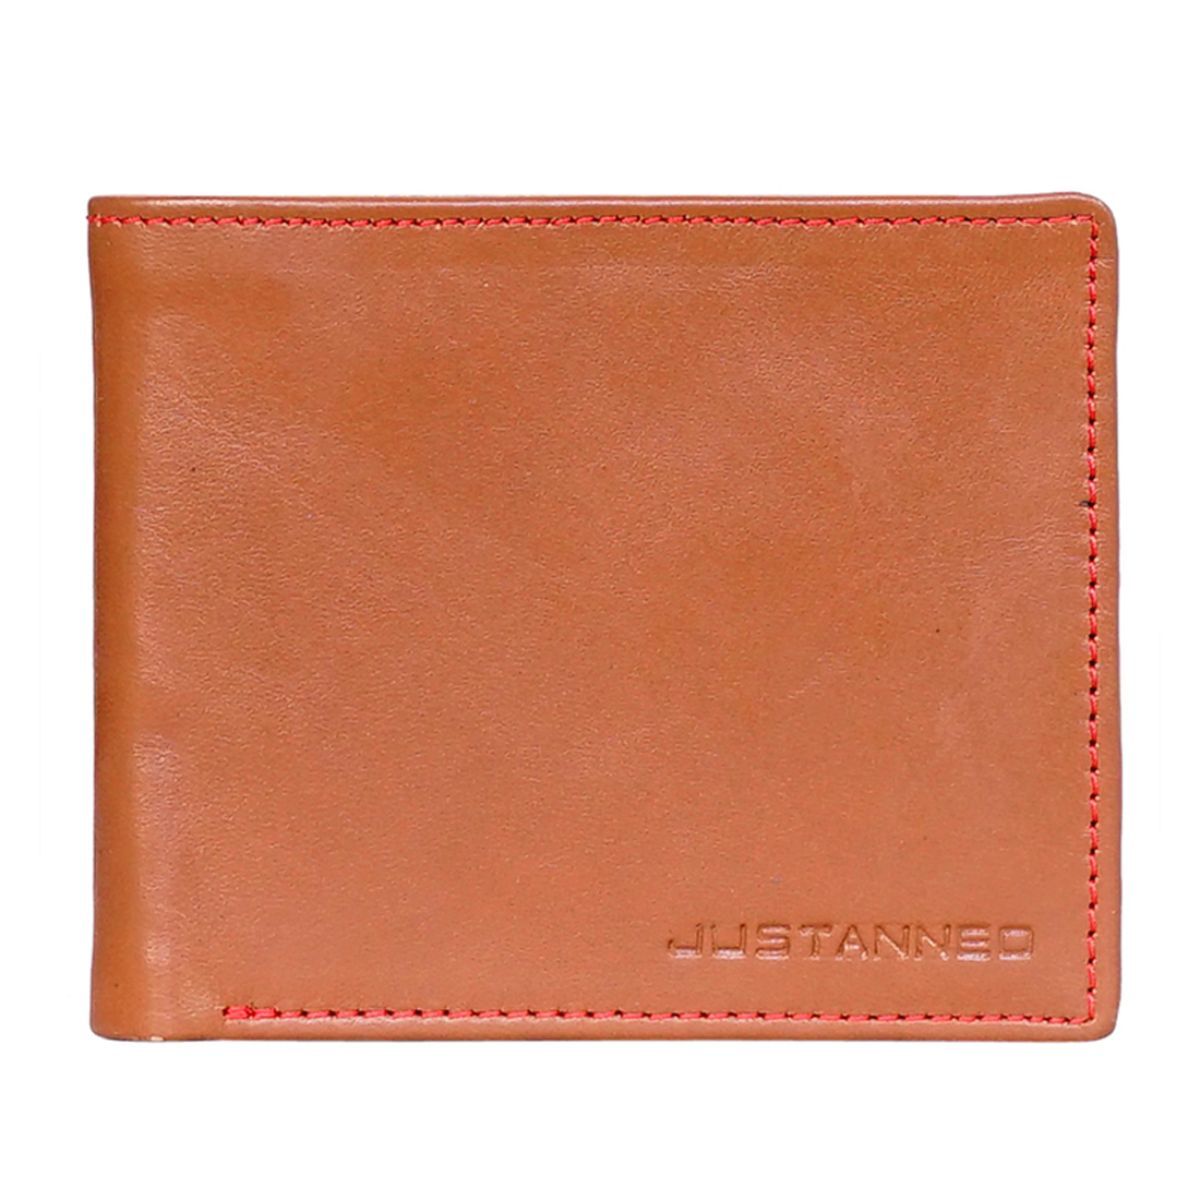 Justanned Men'S Leather Tangerine Wallet